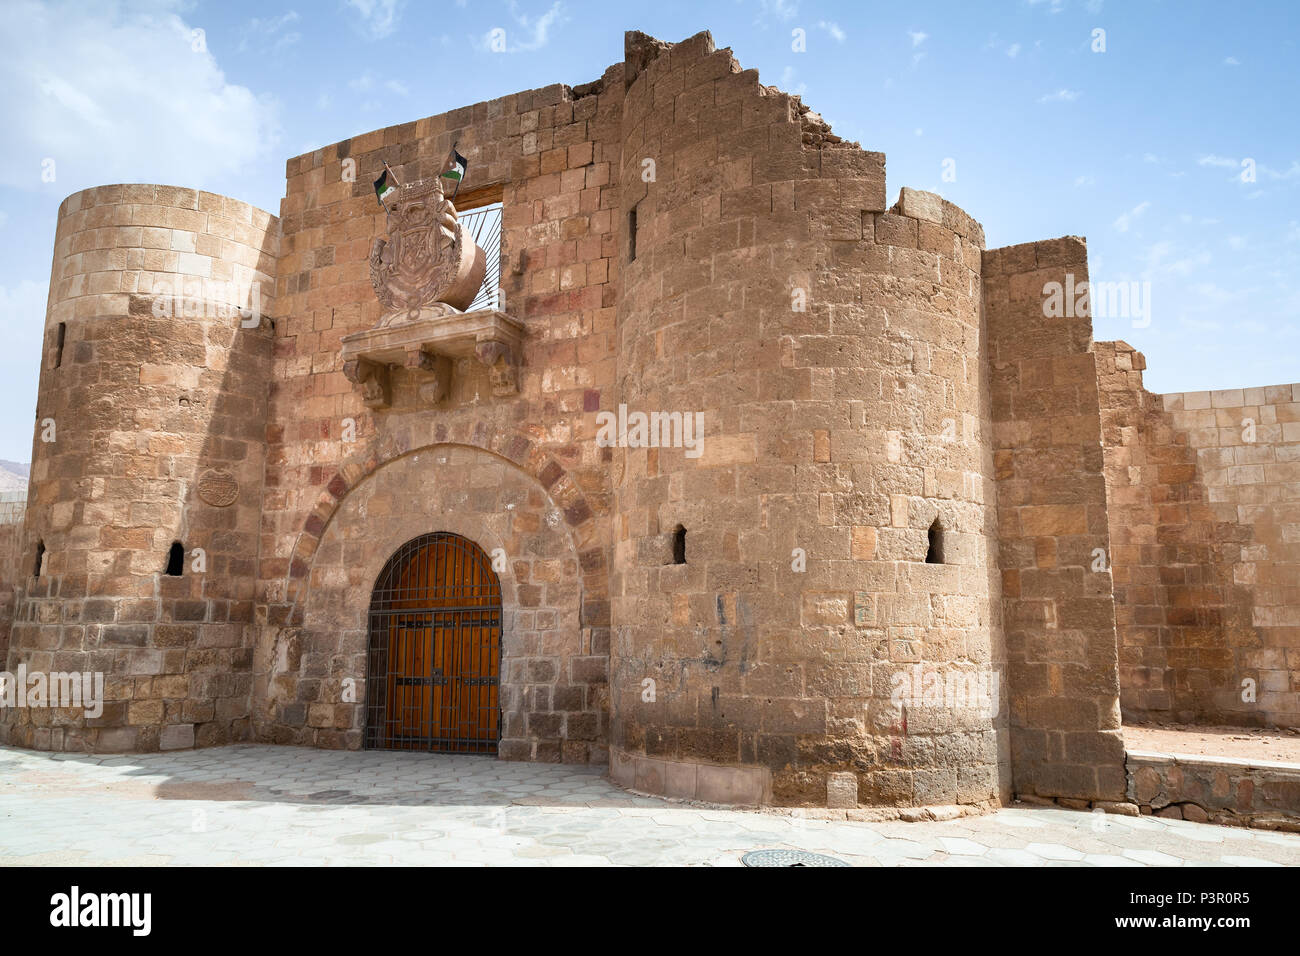 Main entrance gate of Aqaba Fortress, Mamluk Castle or Aqaba Fort located in Aqaba city, Jordan Stock Photo